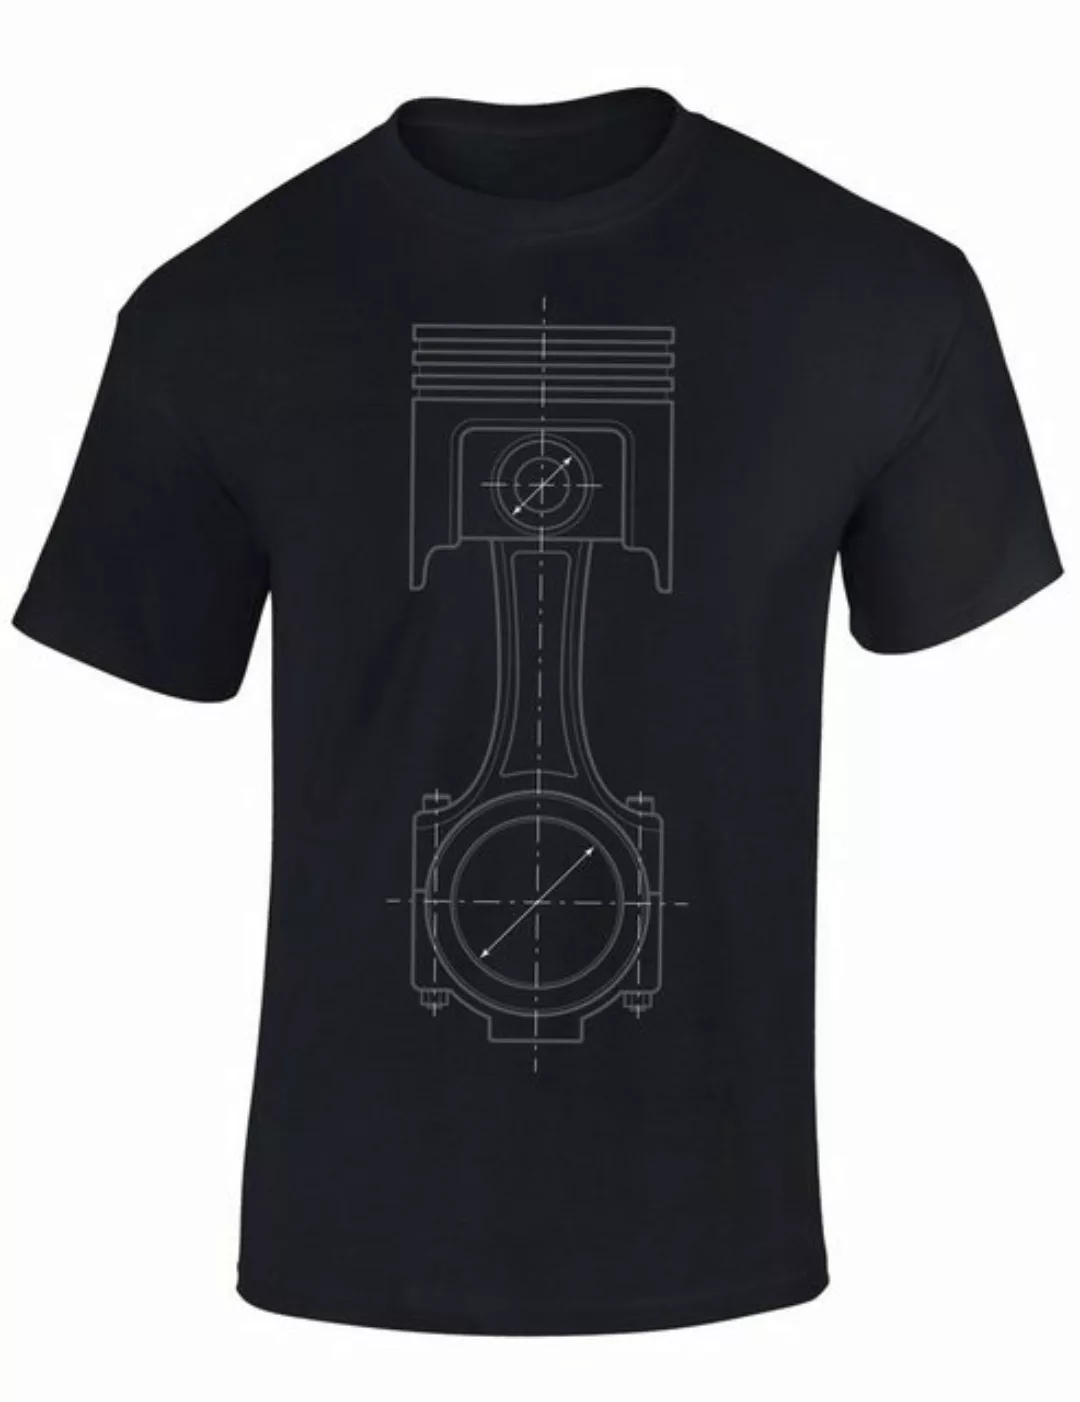 Baddery Print-Shirt Auto T-Shirt: "Kolben Skizze" - Motorsport Tuning Autol günstig online kaufen